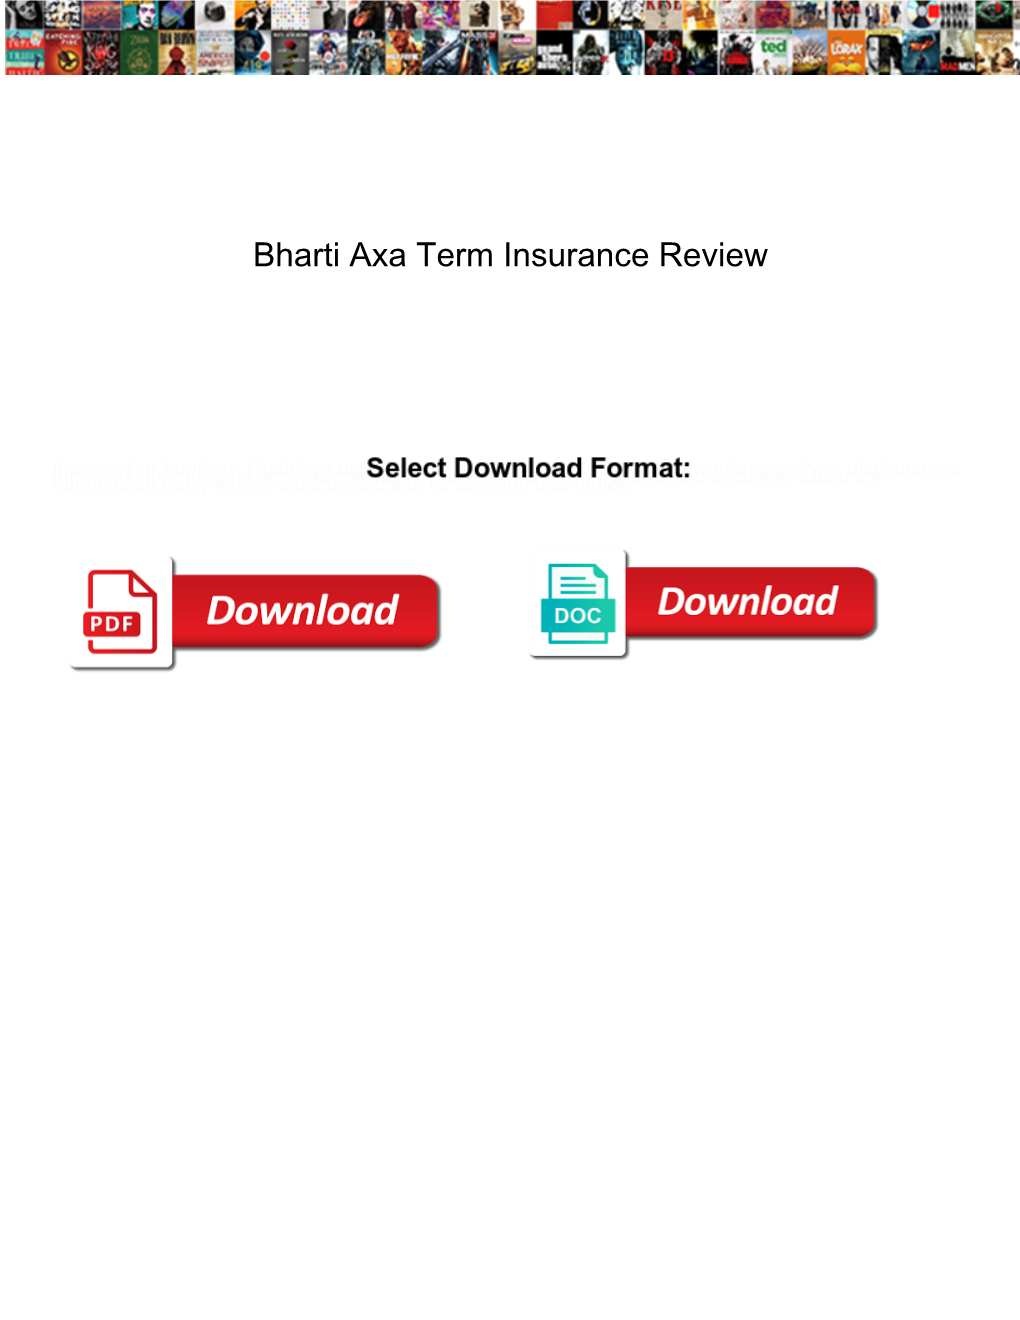 Bharti Axa Term Insurance Review